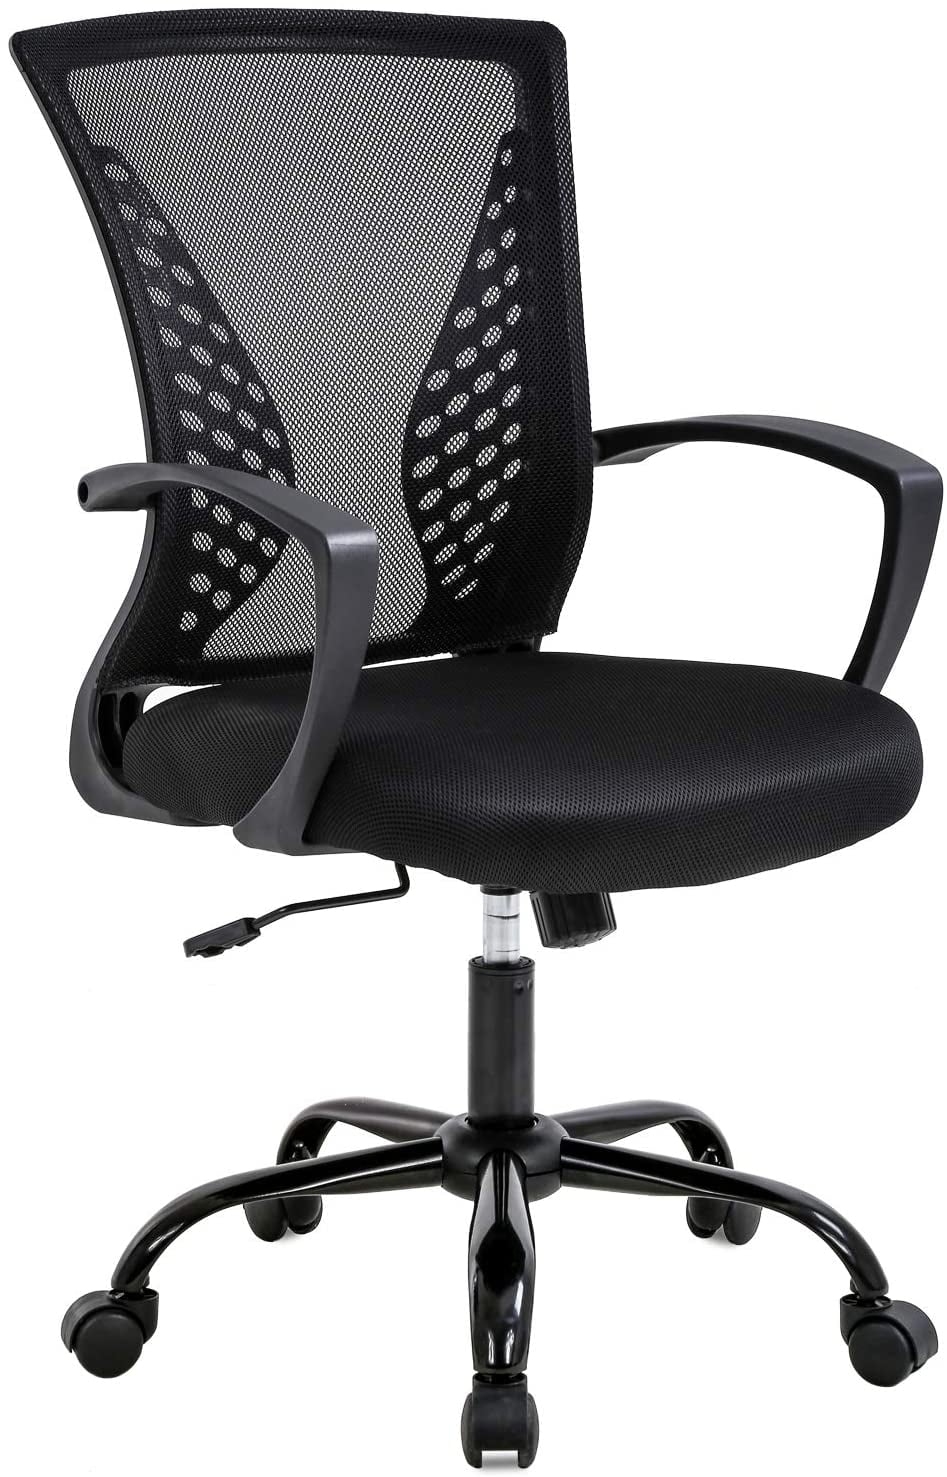 Adjustable Swivel Executive Office Chair Mesh Computer Desk Chair Lumbar Support 